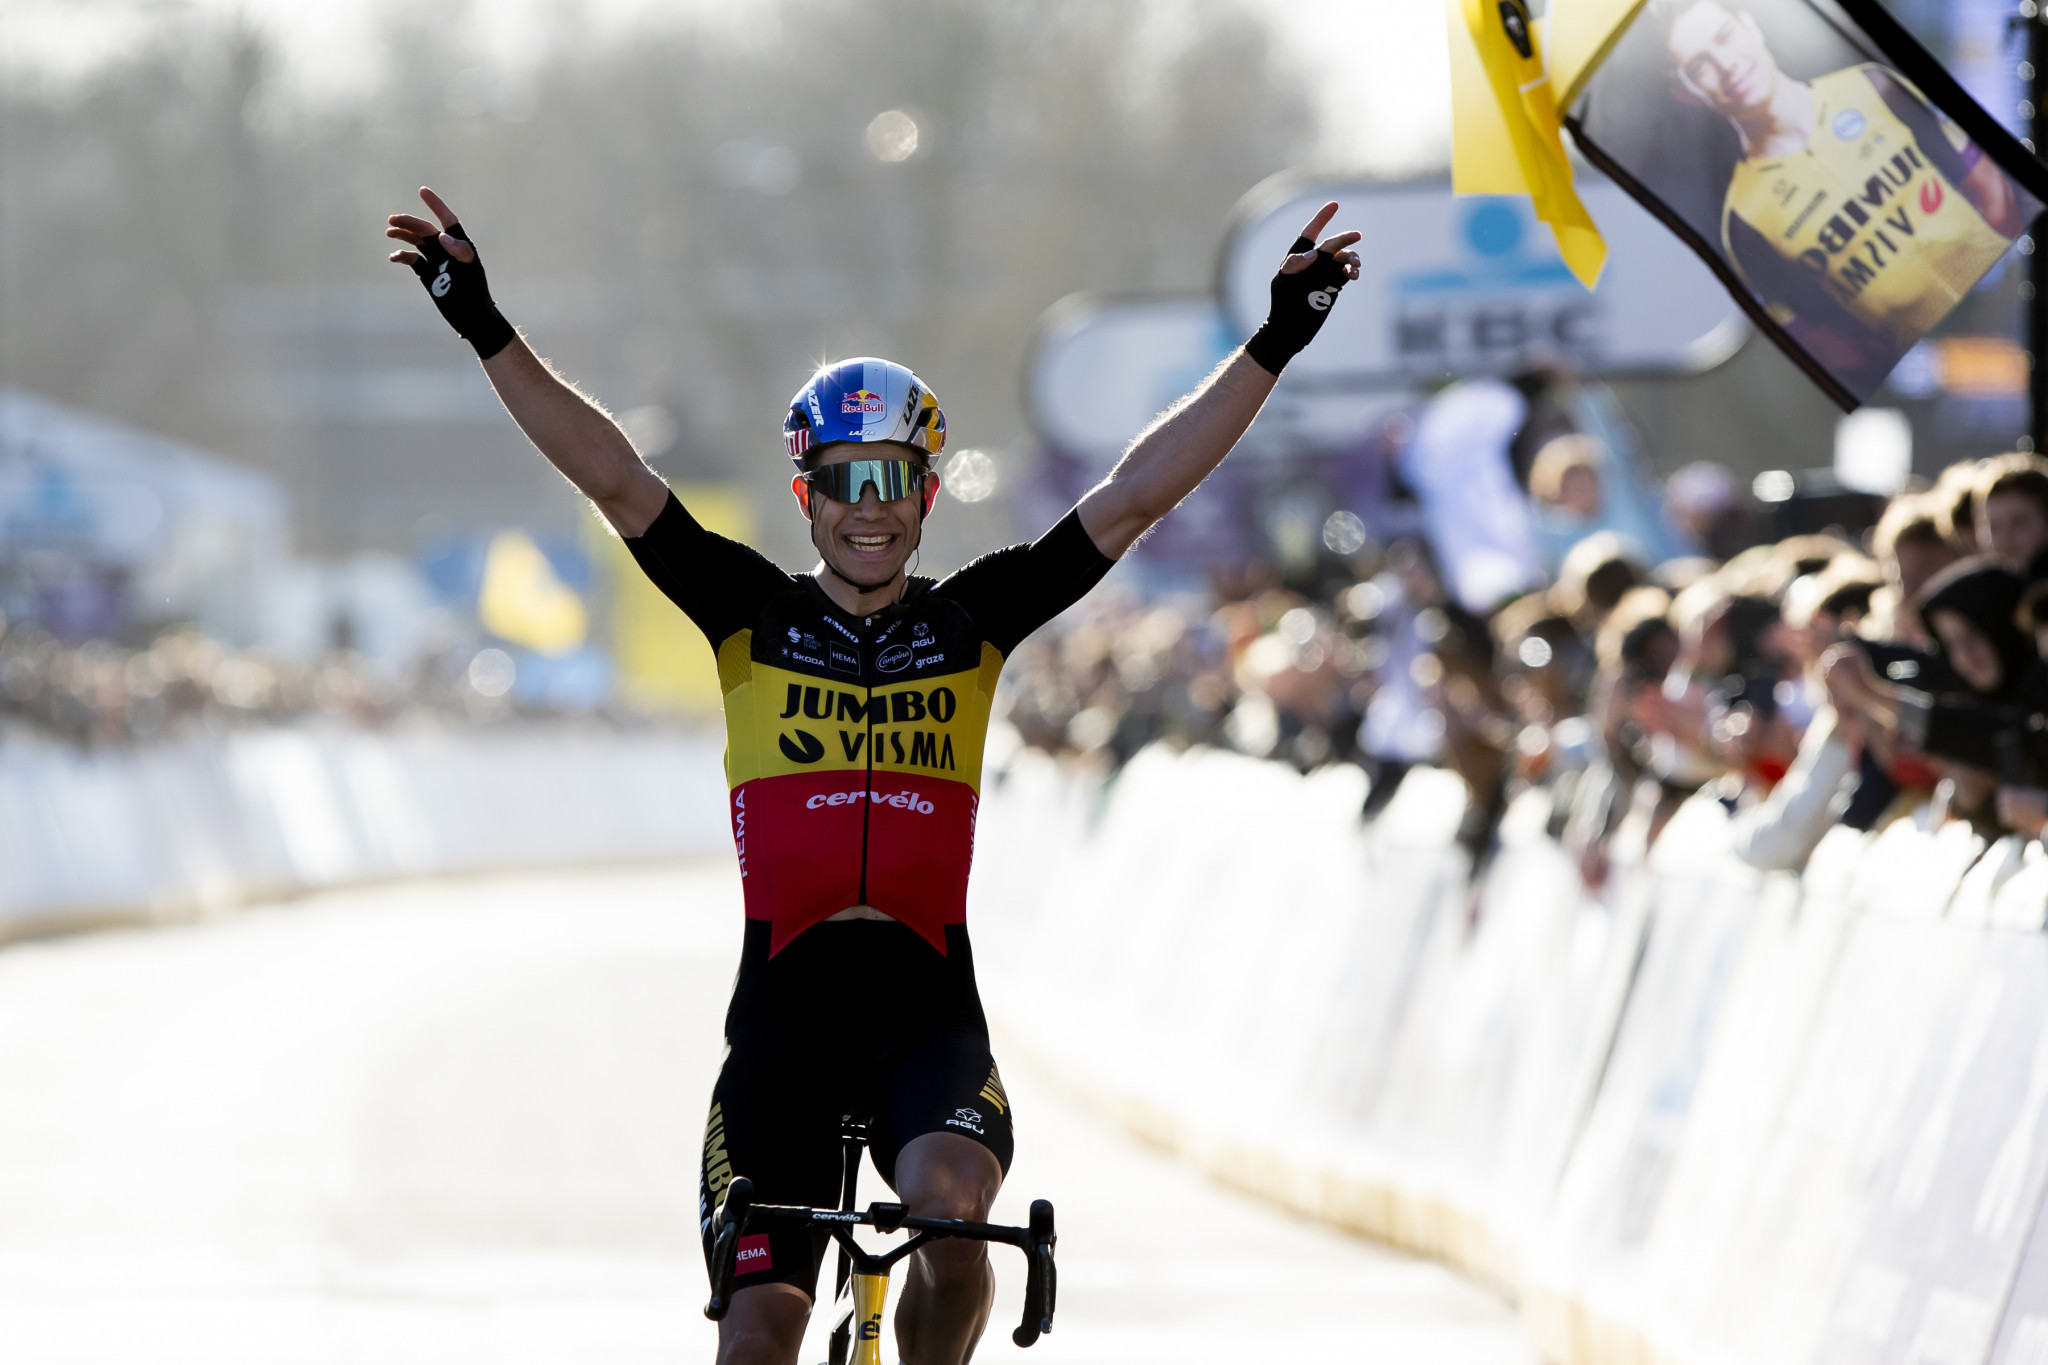 Wout van Aert secured victory in the Omloop Het Nieuwsblad in front of home support ©Getty Images